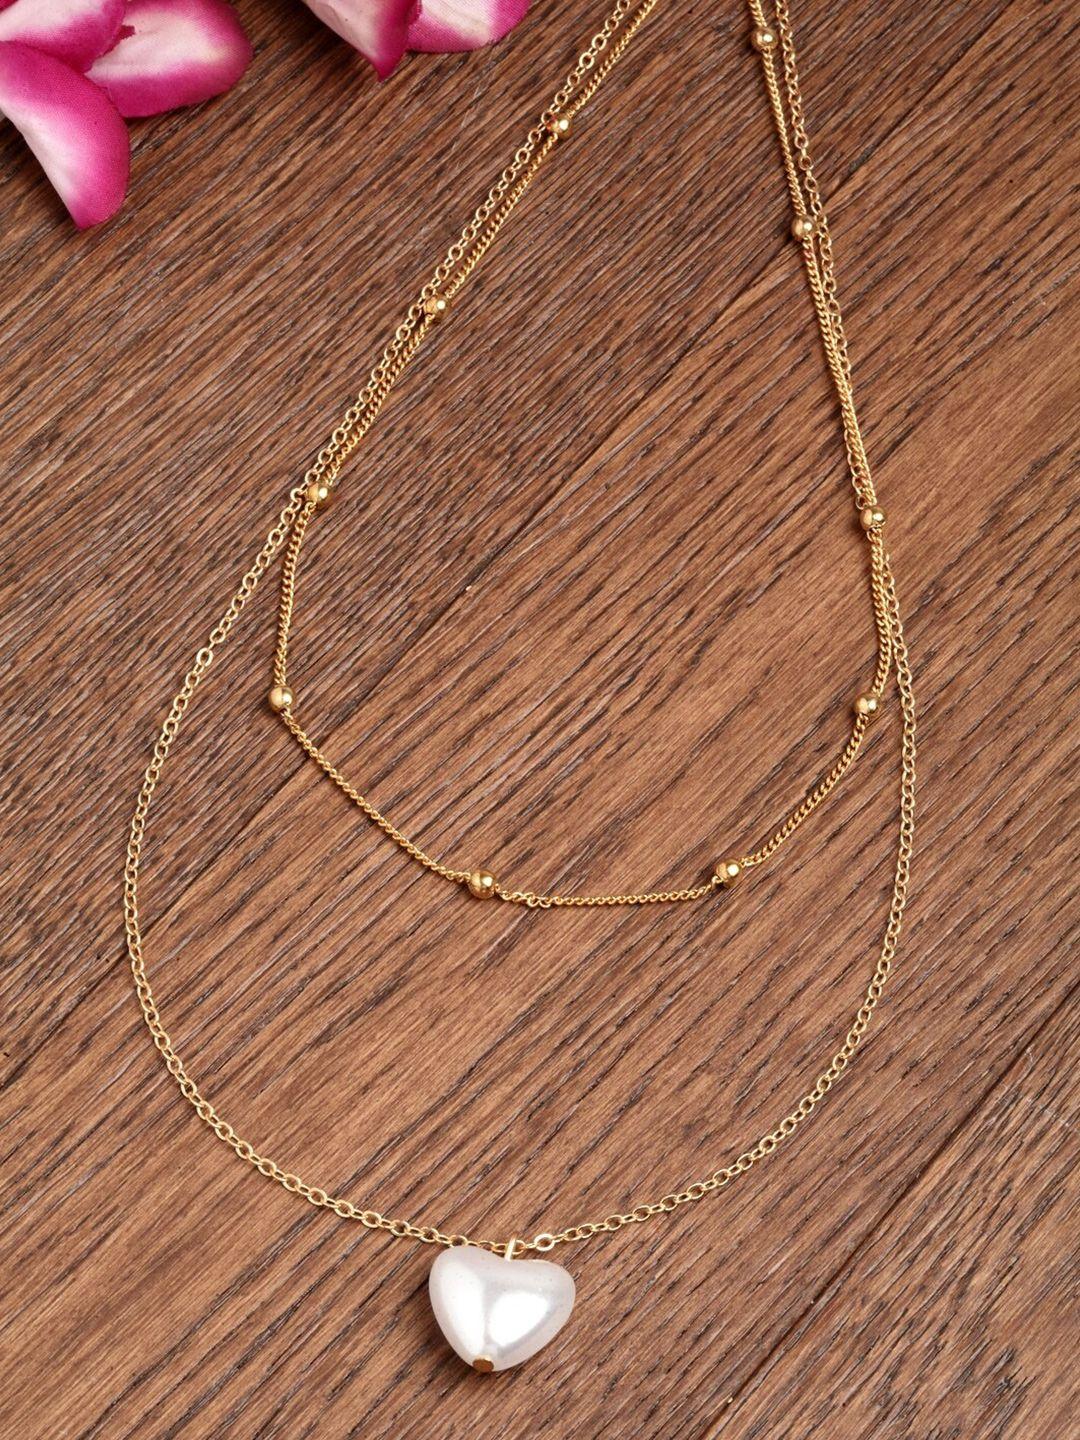 ferosh gold-toned alloy layered necklace